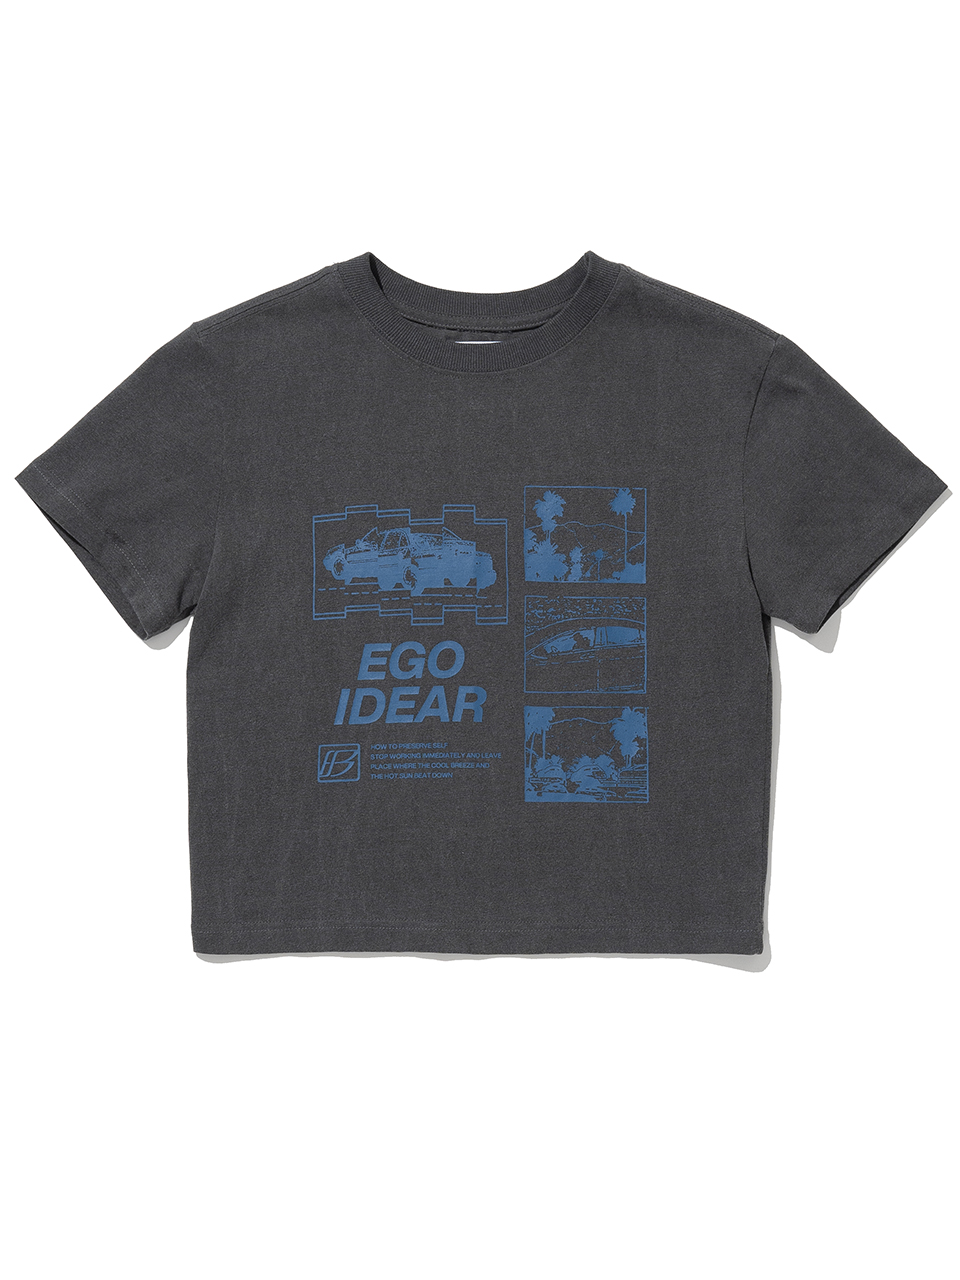 Ego Idear T-Shirt - Cement Gray